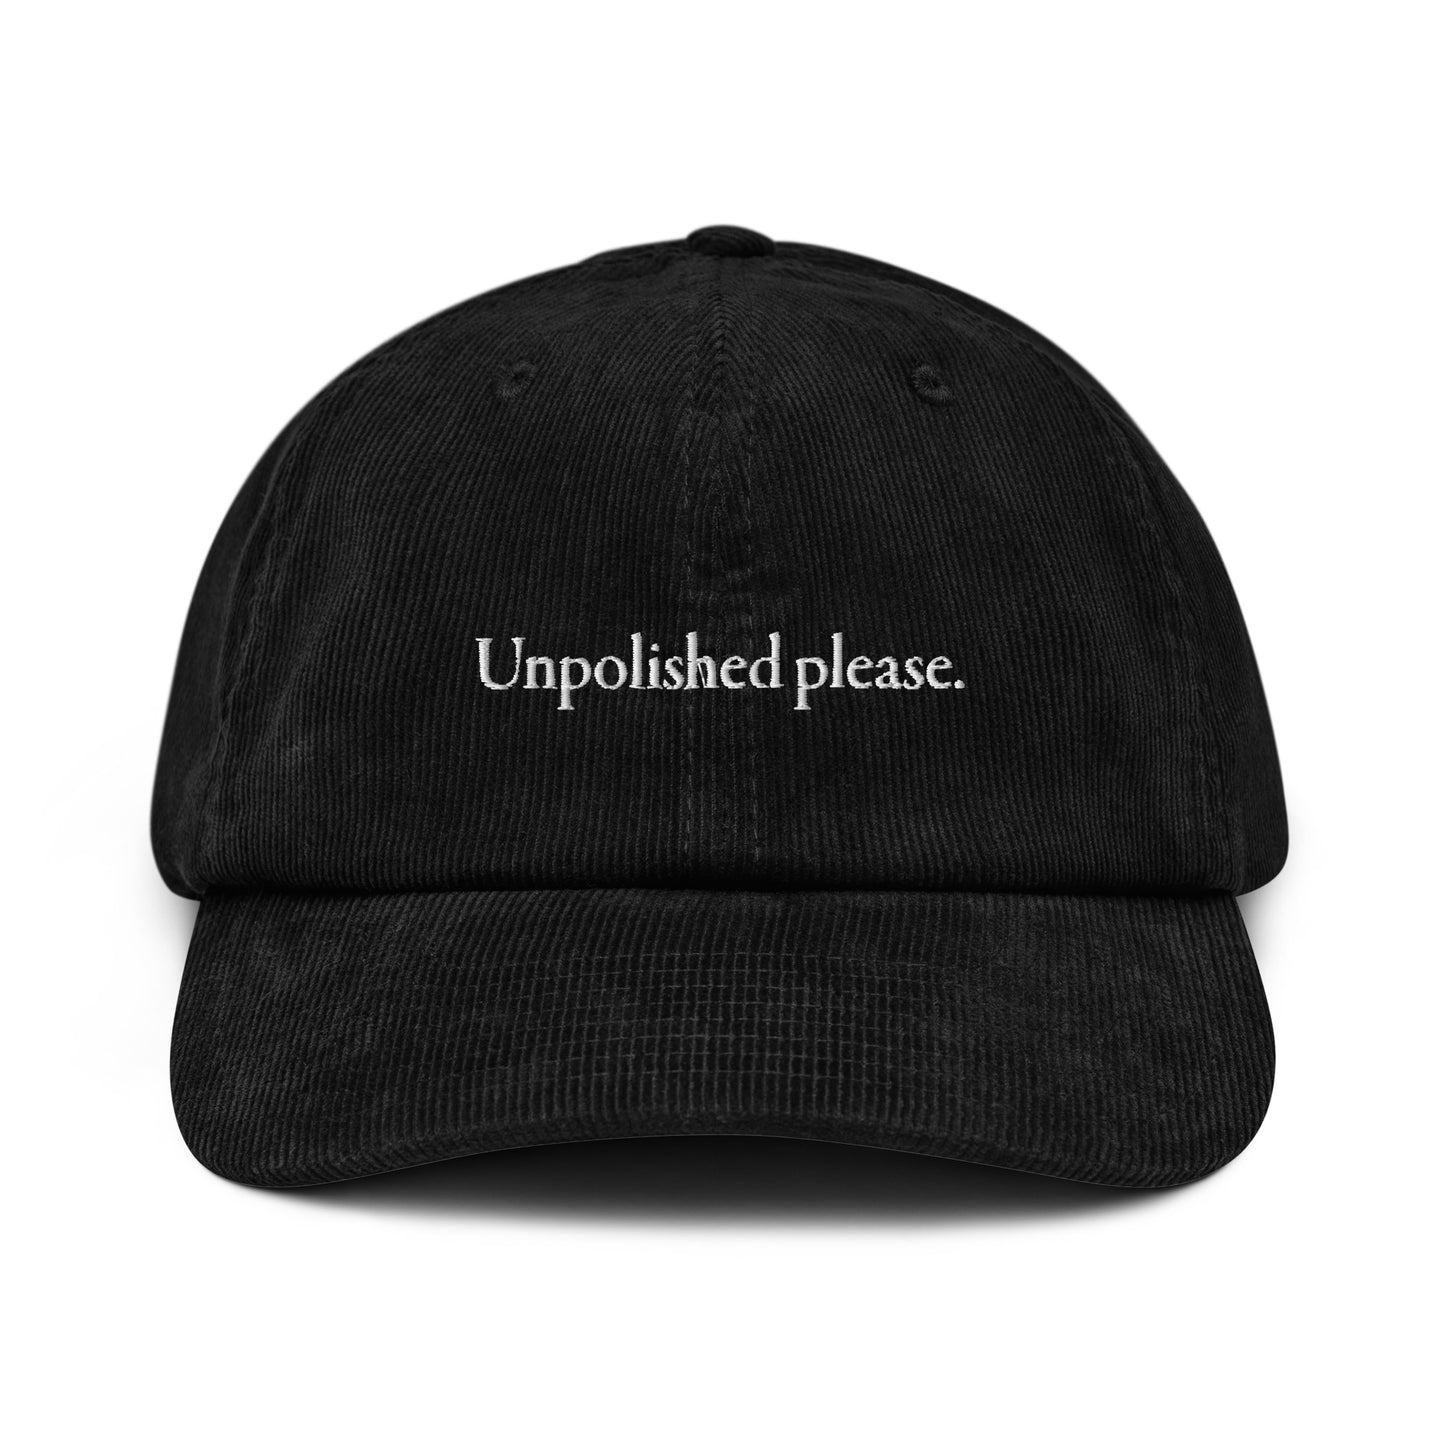 Unpolished please - original corduroy hat